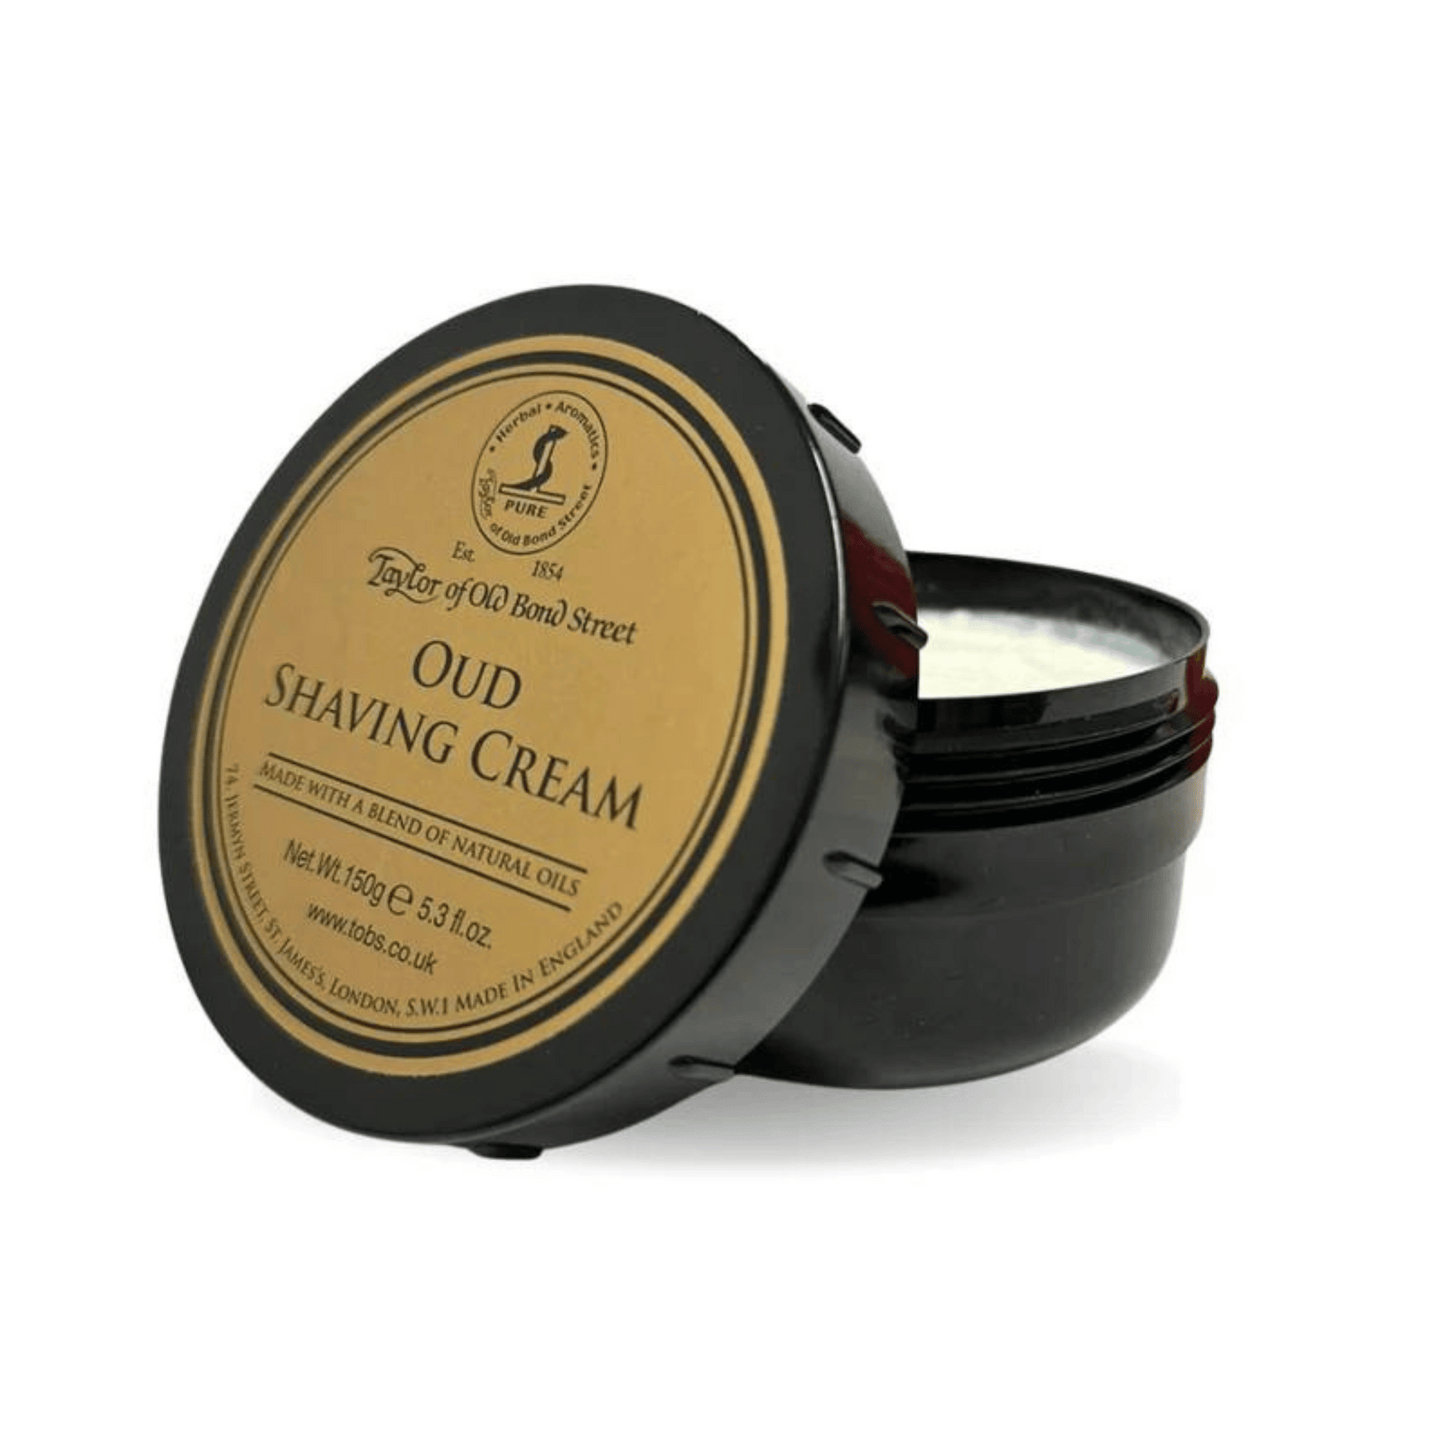 Primary Image of Oud Shaving Cream